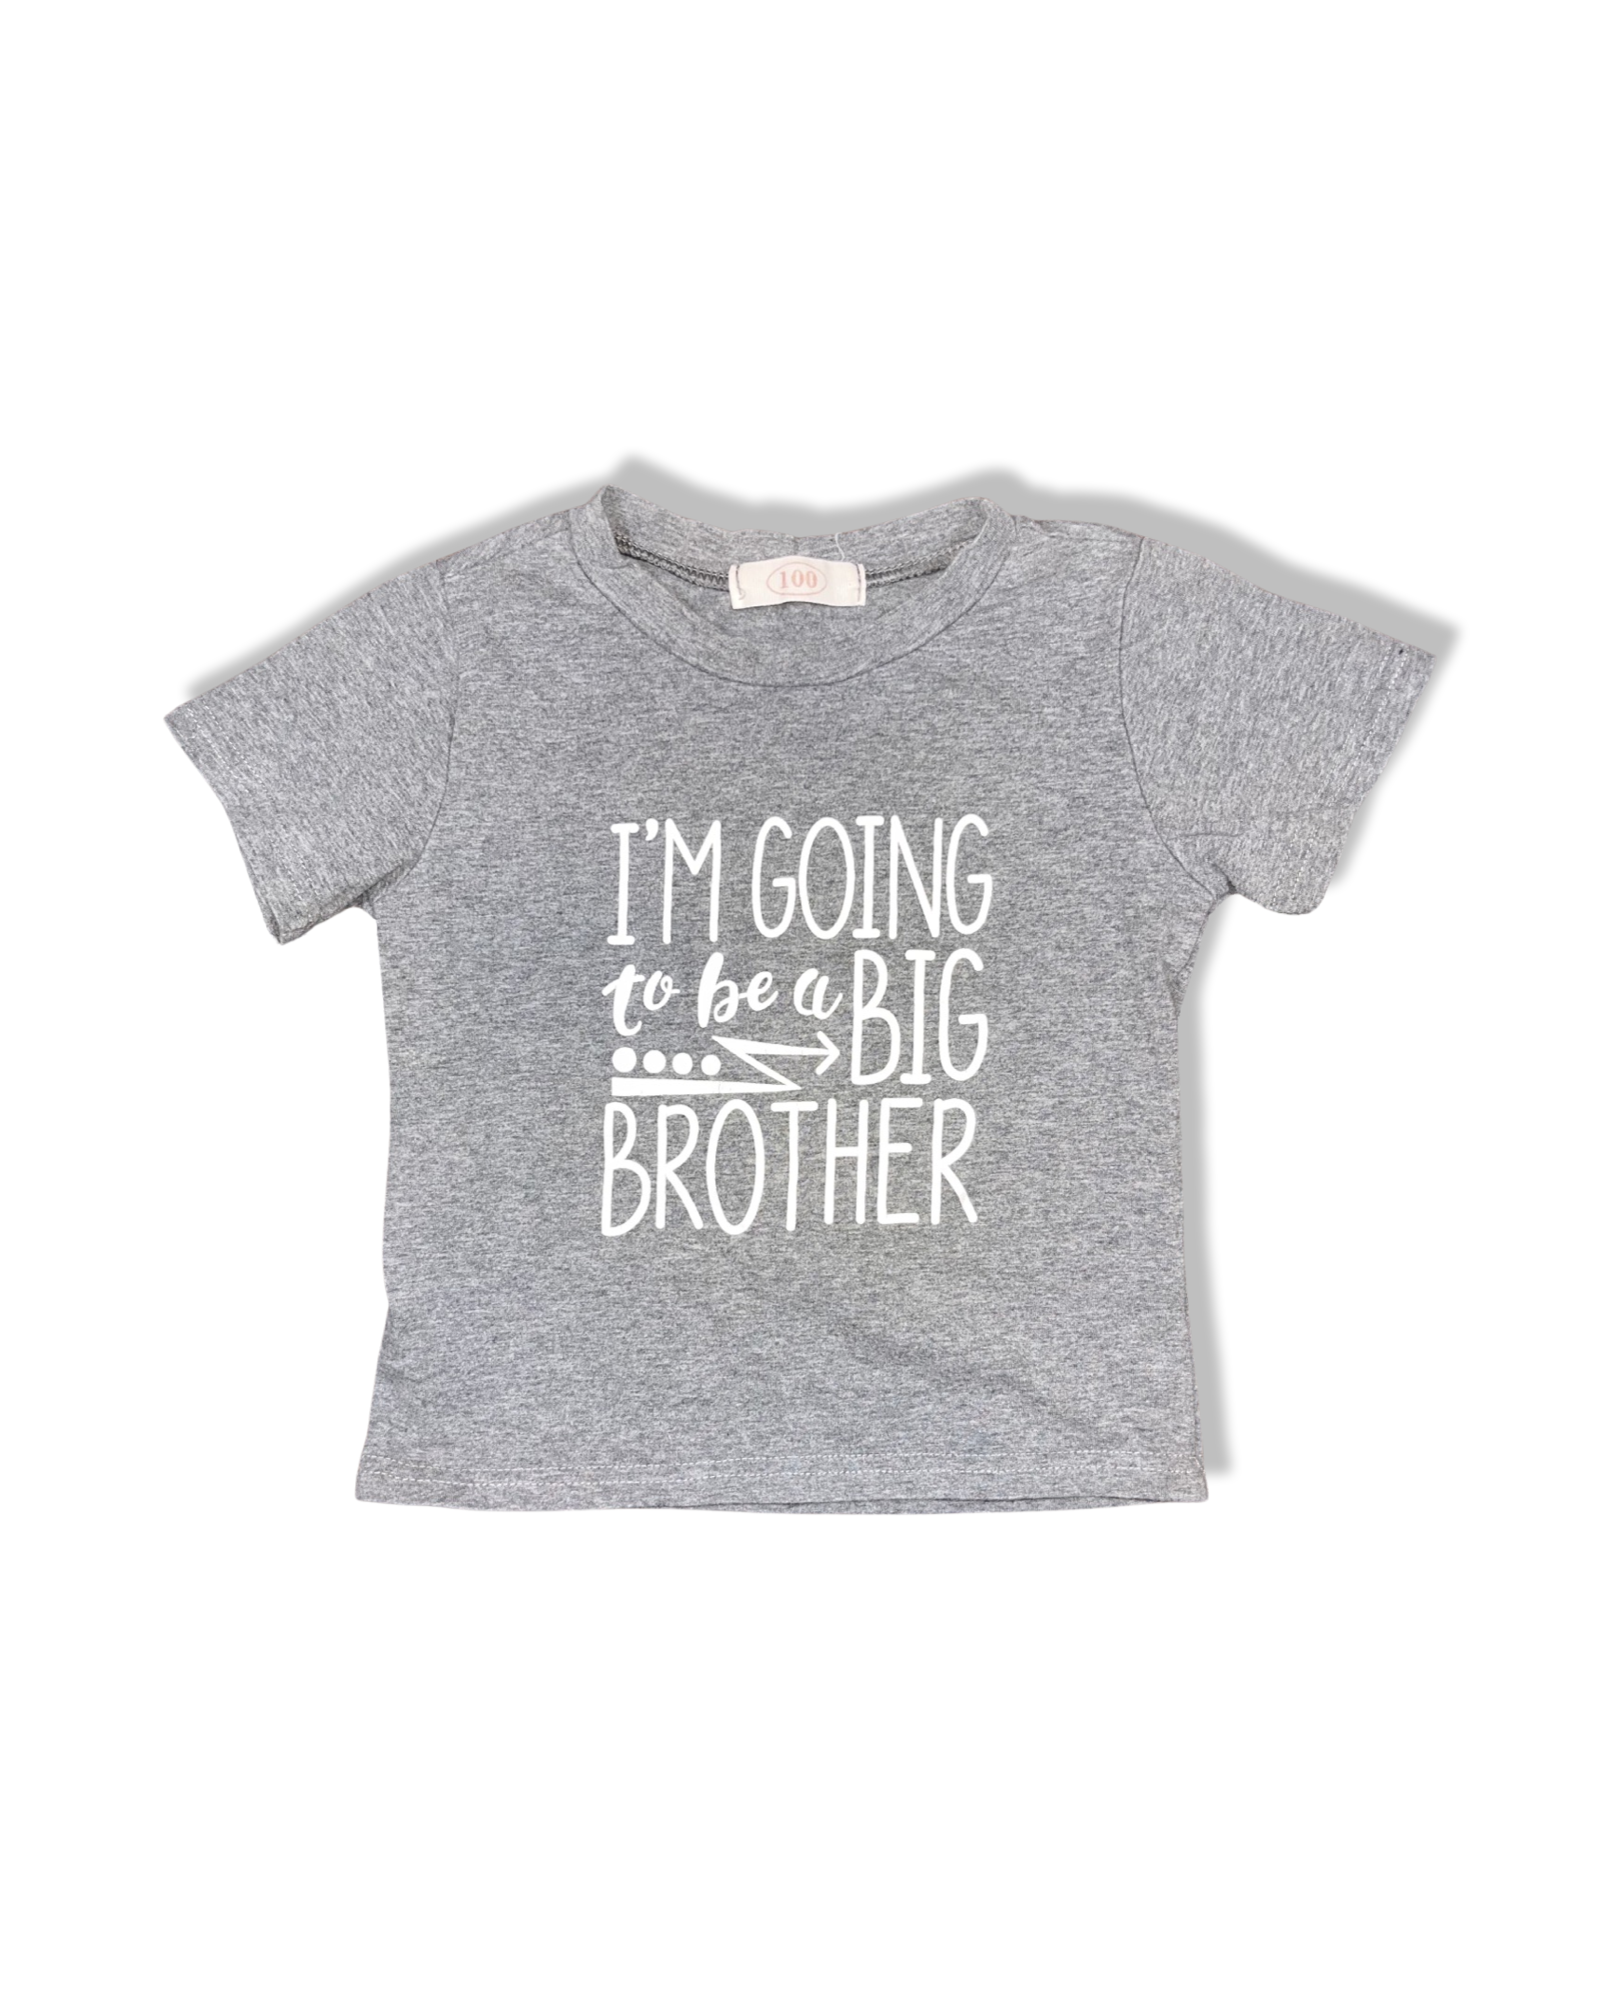 Big Brother T-shirt (3T)